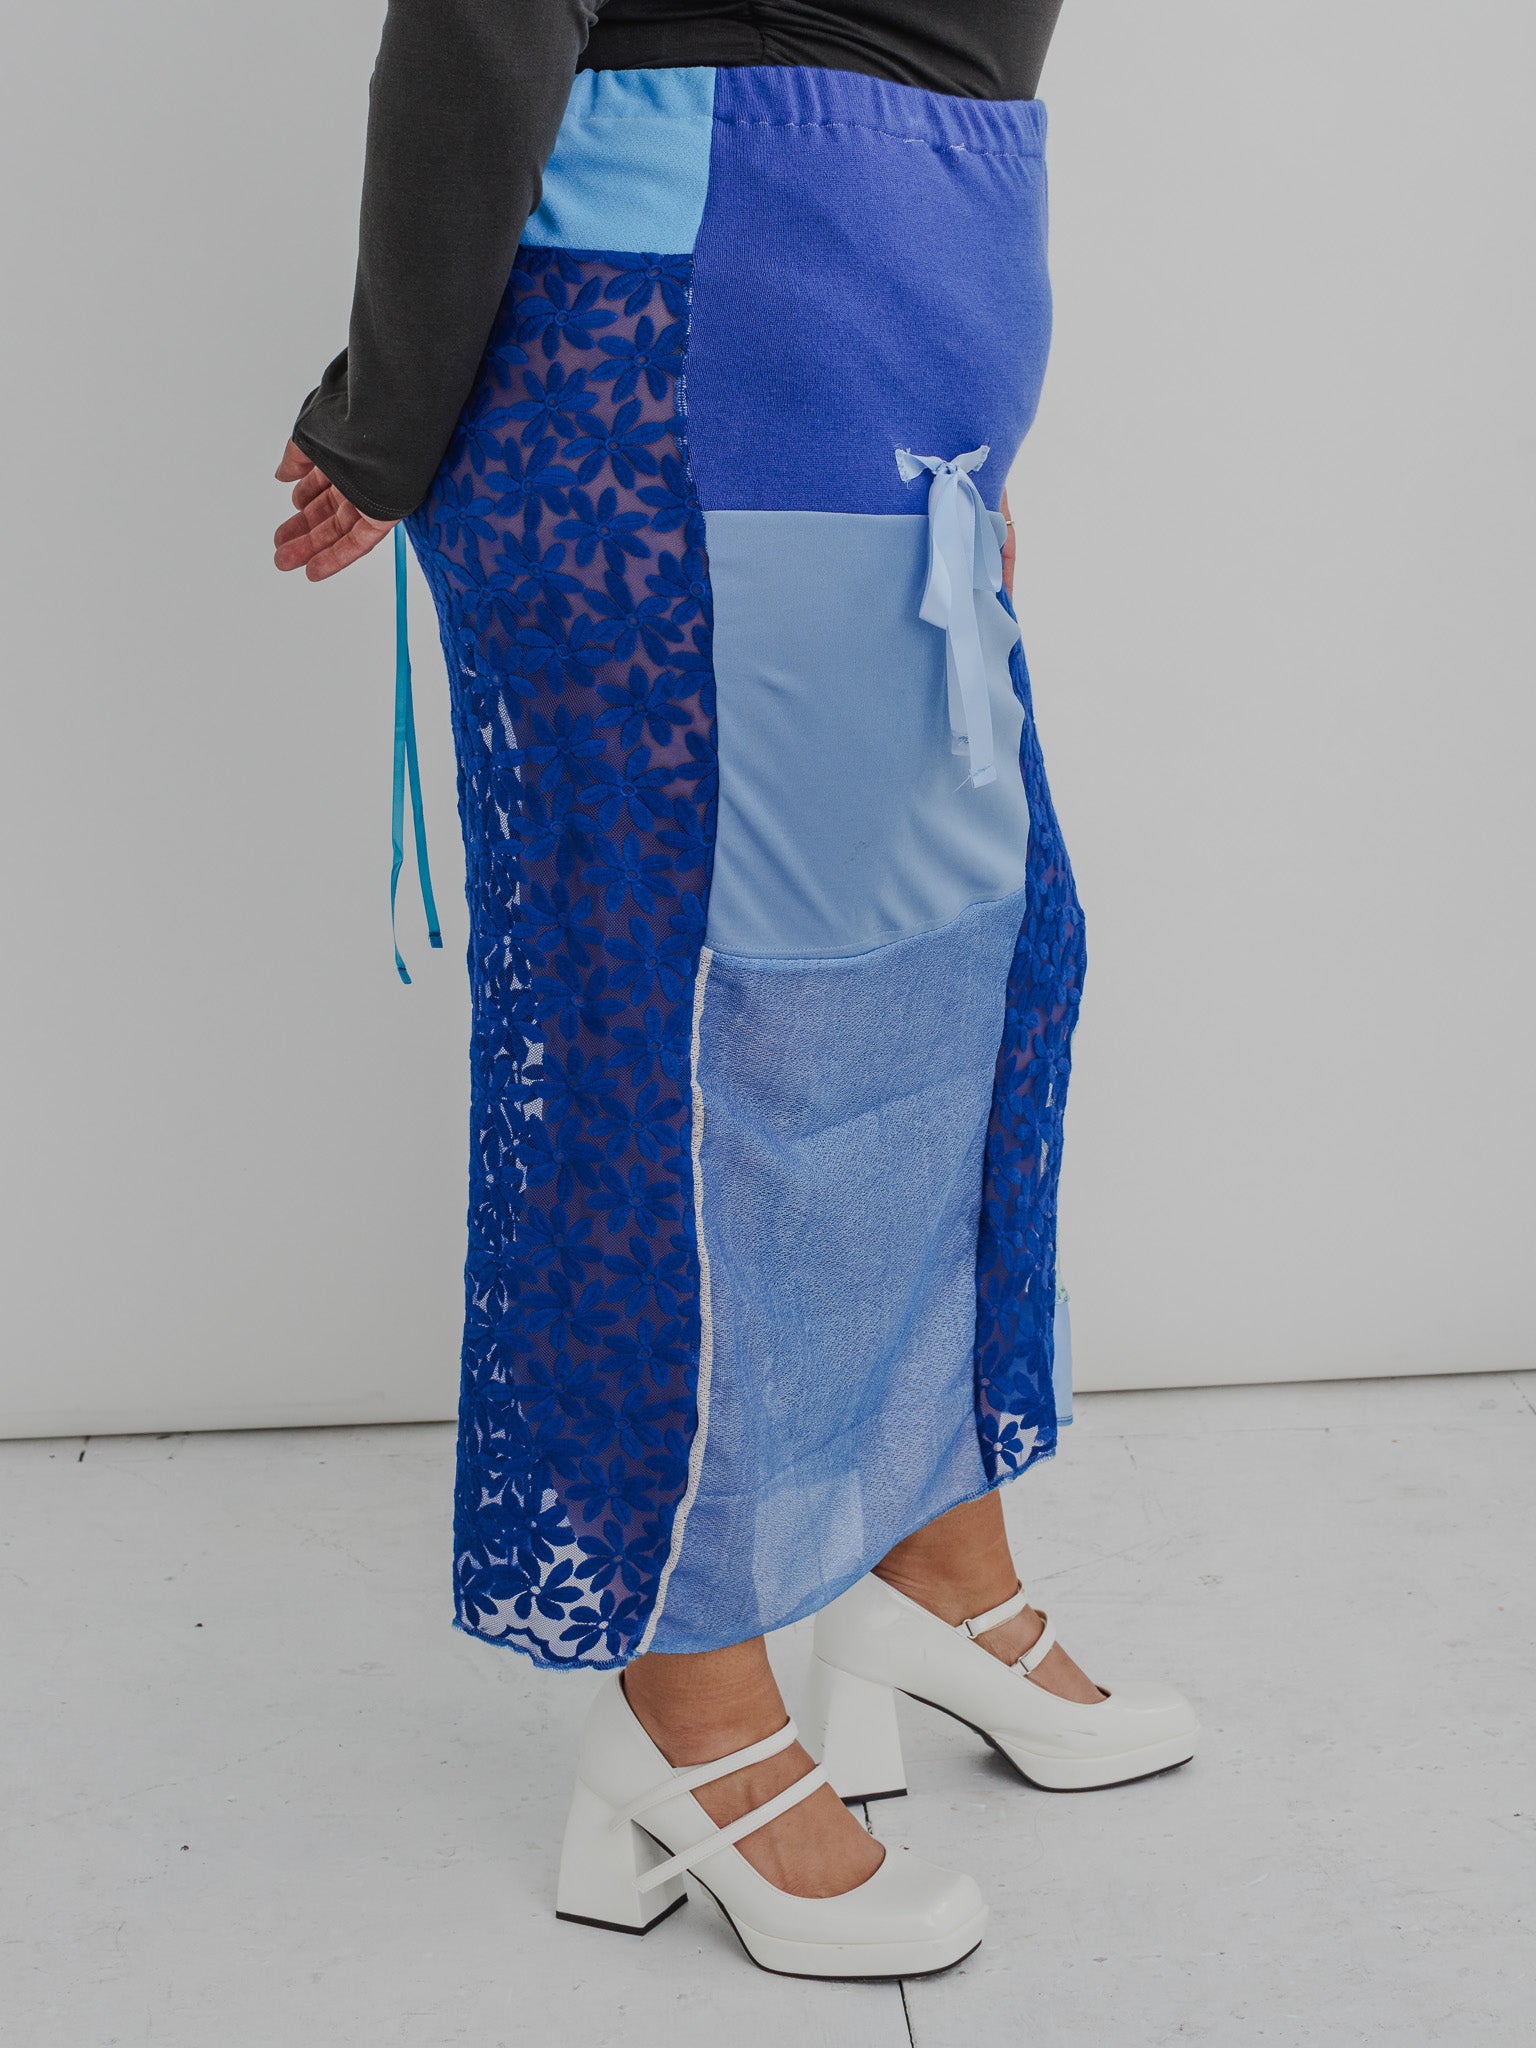 FiOT - Blue Bow Skirt (1X)